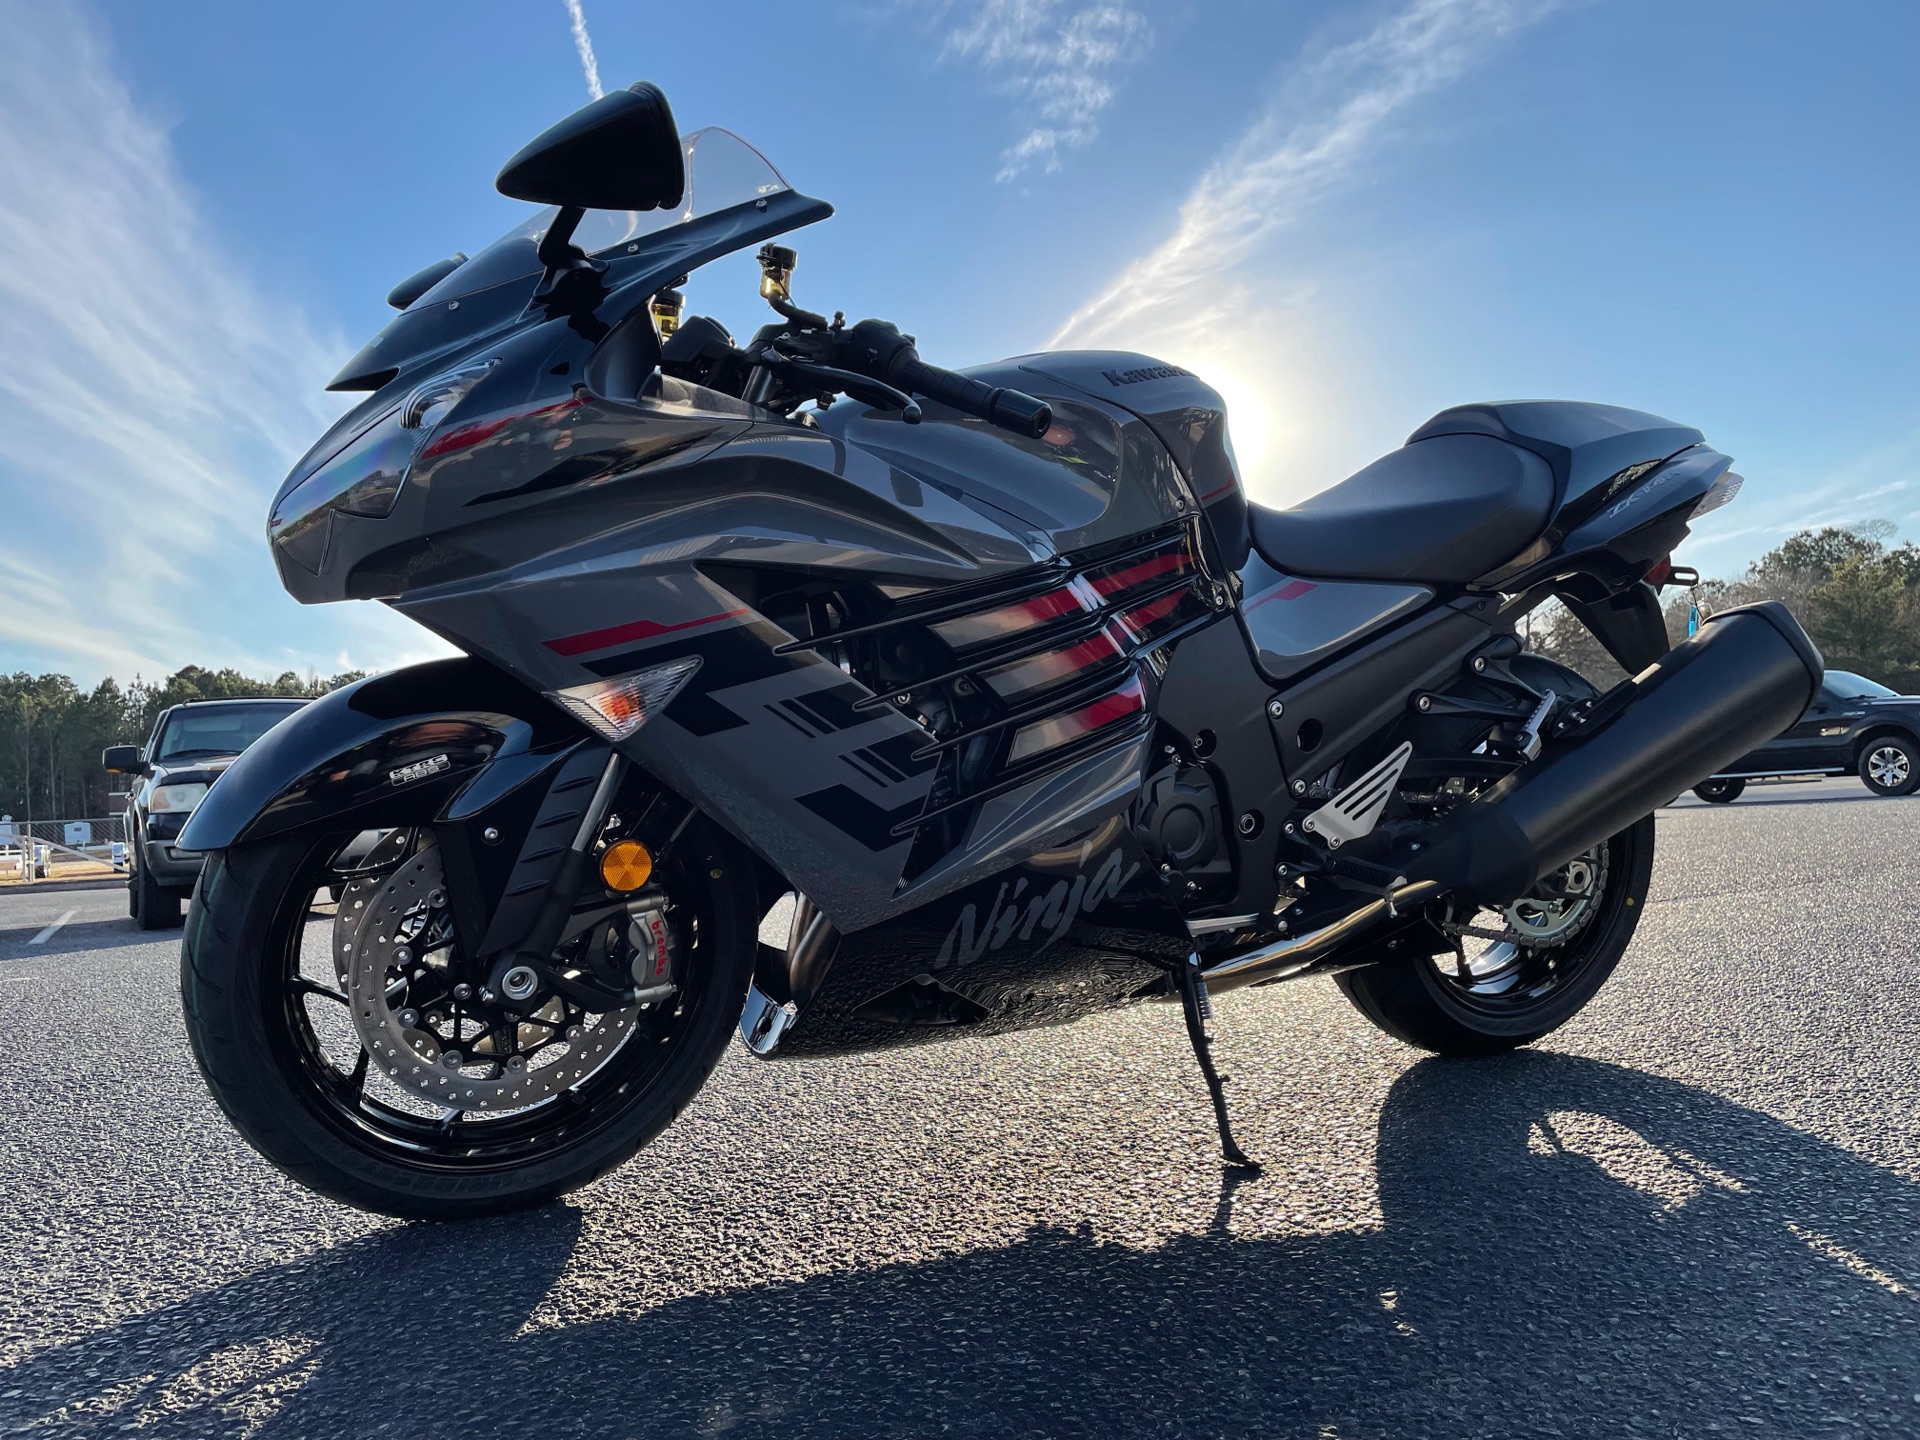 New 2022 Kawasaki Ninja ZX-14R ABS Motorcycles in Greenville, NC | Stock  Number: N/A